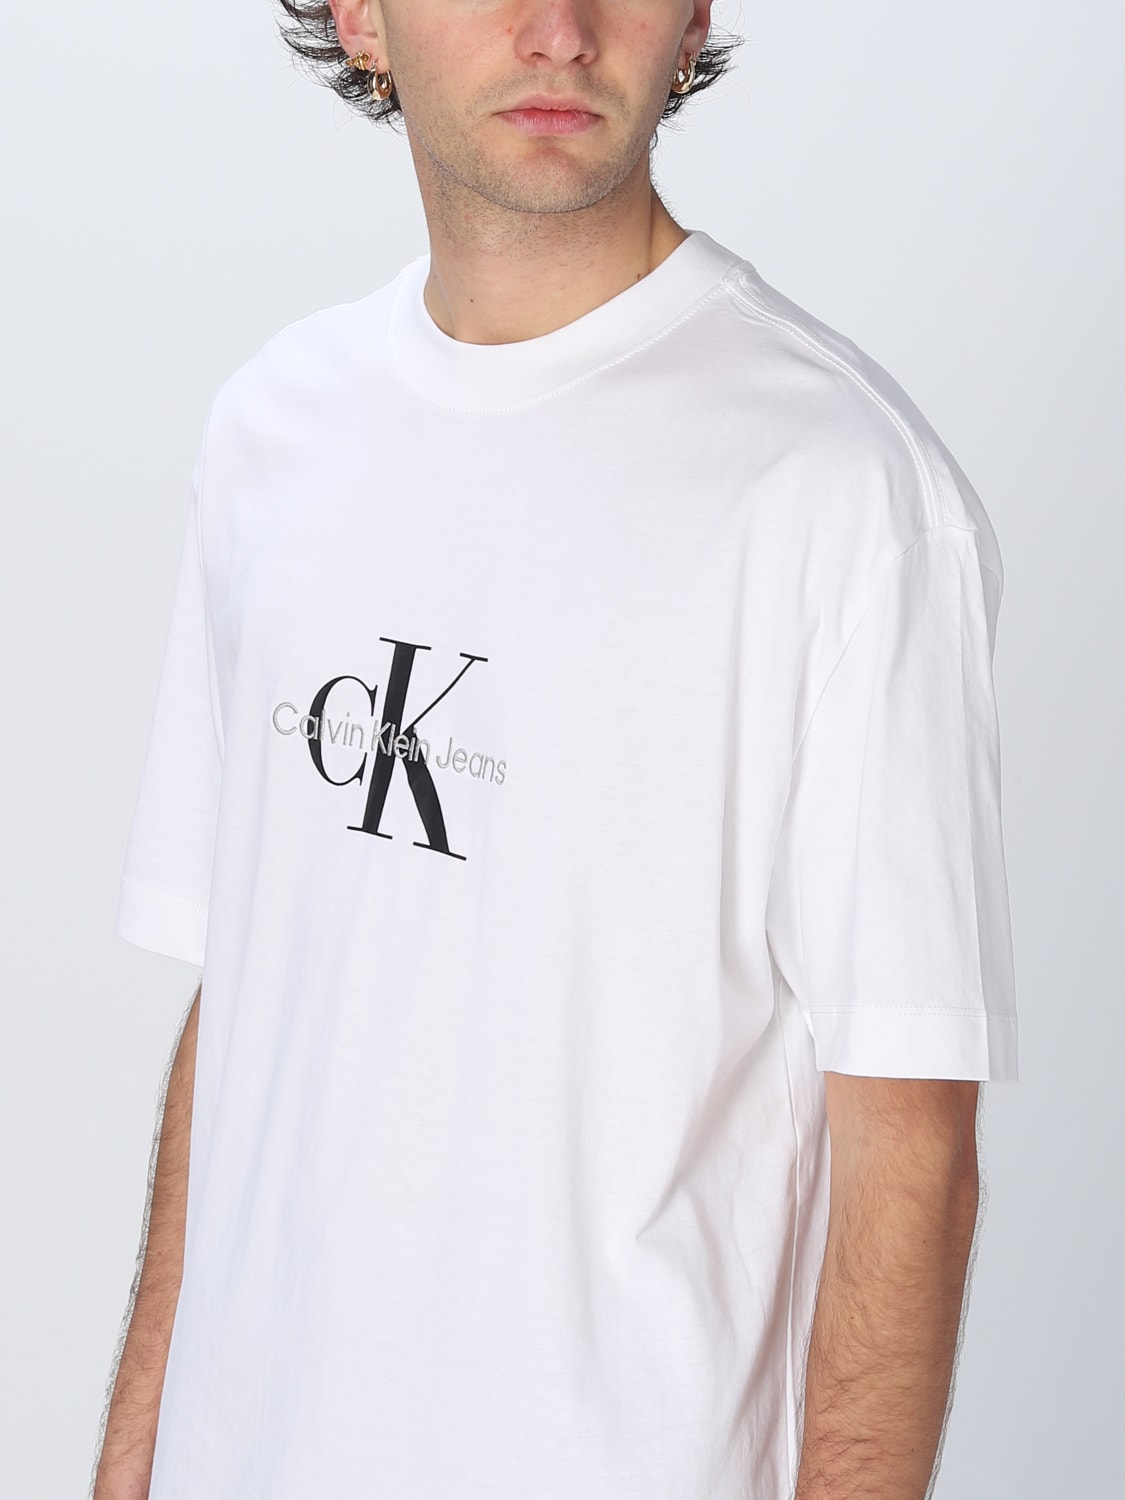 CALVIN KLEIN JEANS: Camiseta para Blanco | Camiseta Calvin Klein Jeans J30J323307 en línea en GIGLIO.COM